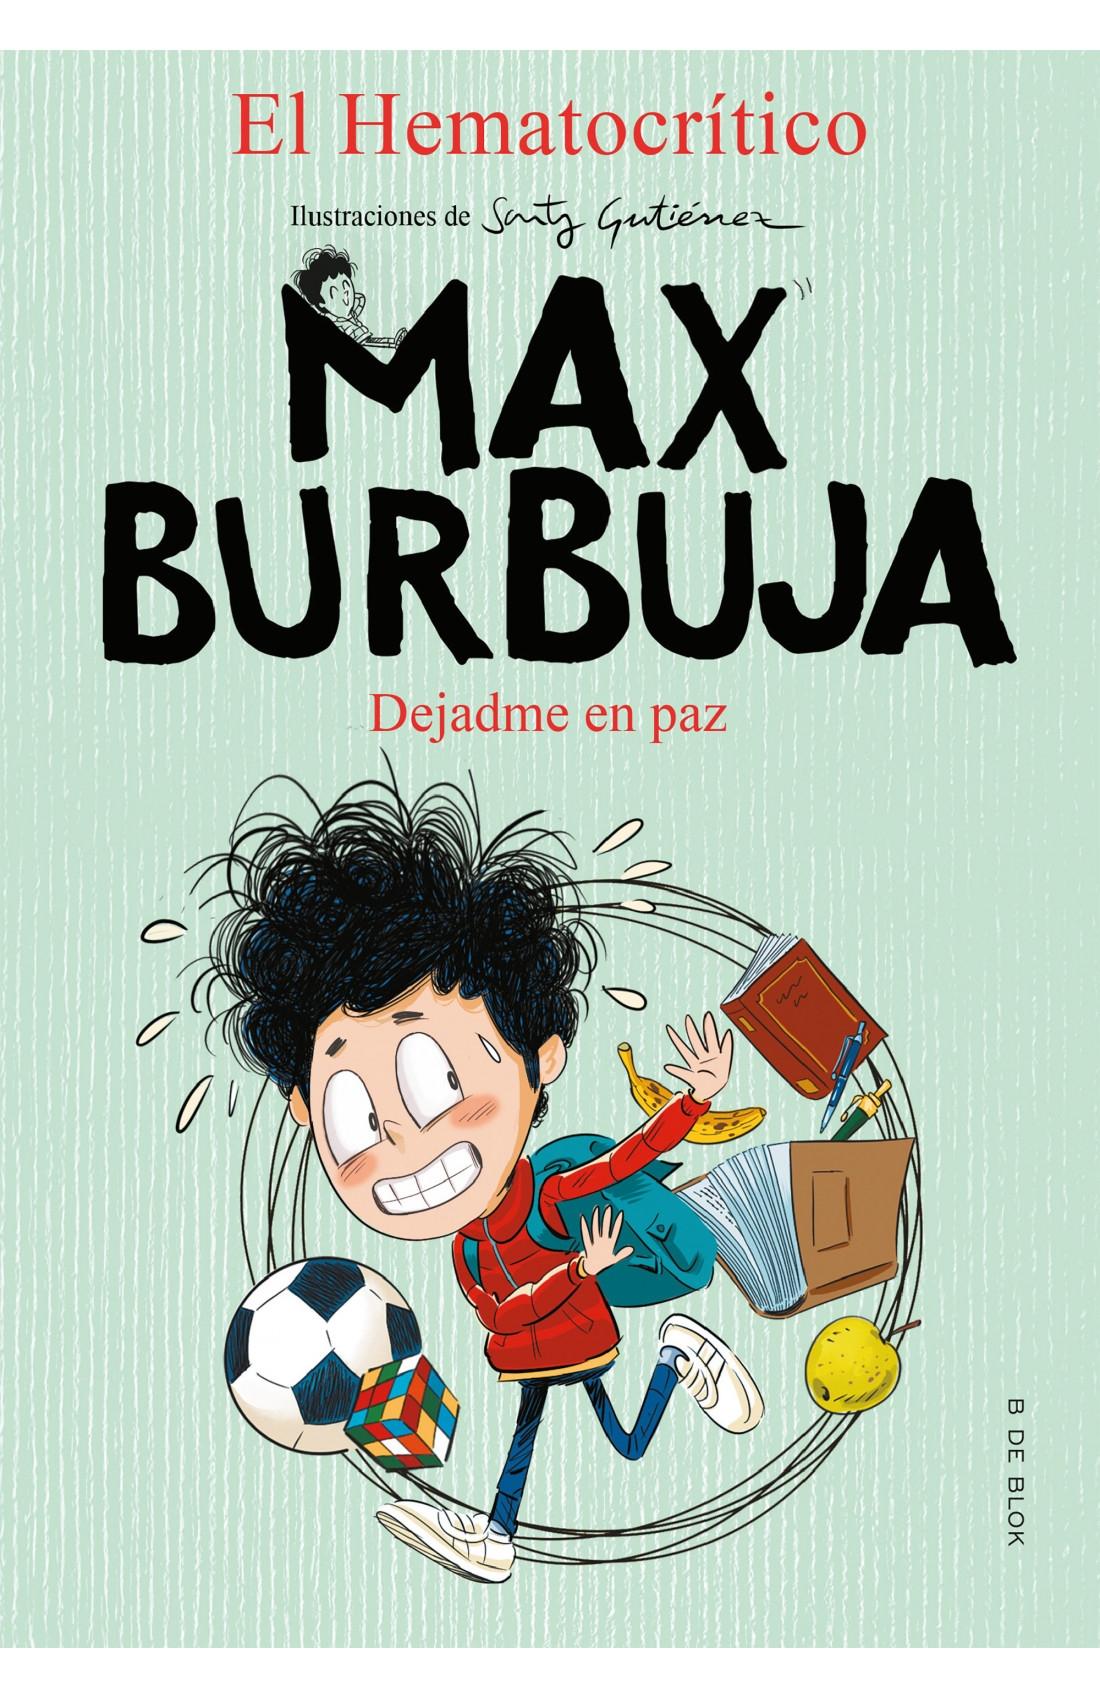 Max Burbuja 1 "Dejadme en paz". 